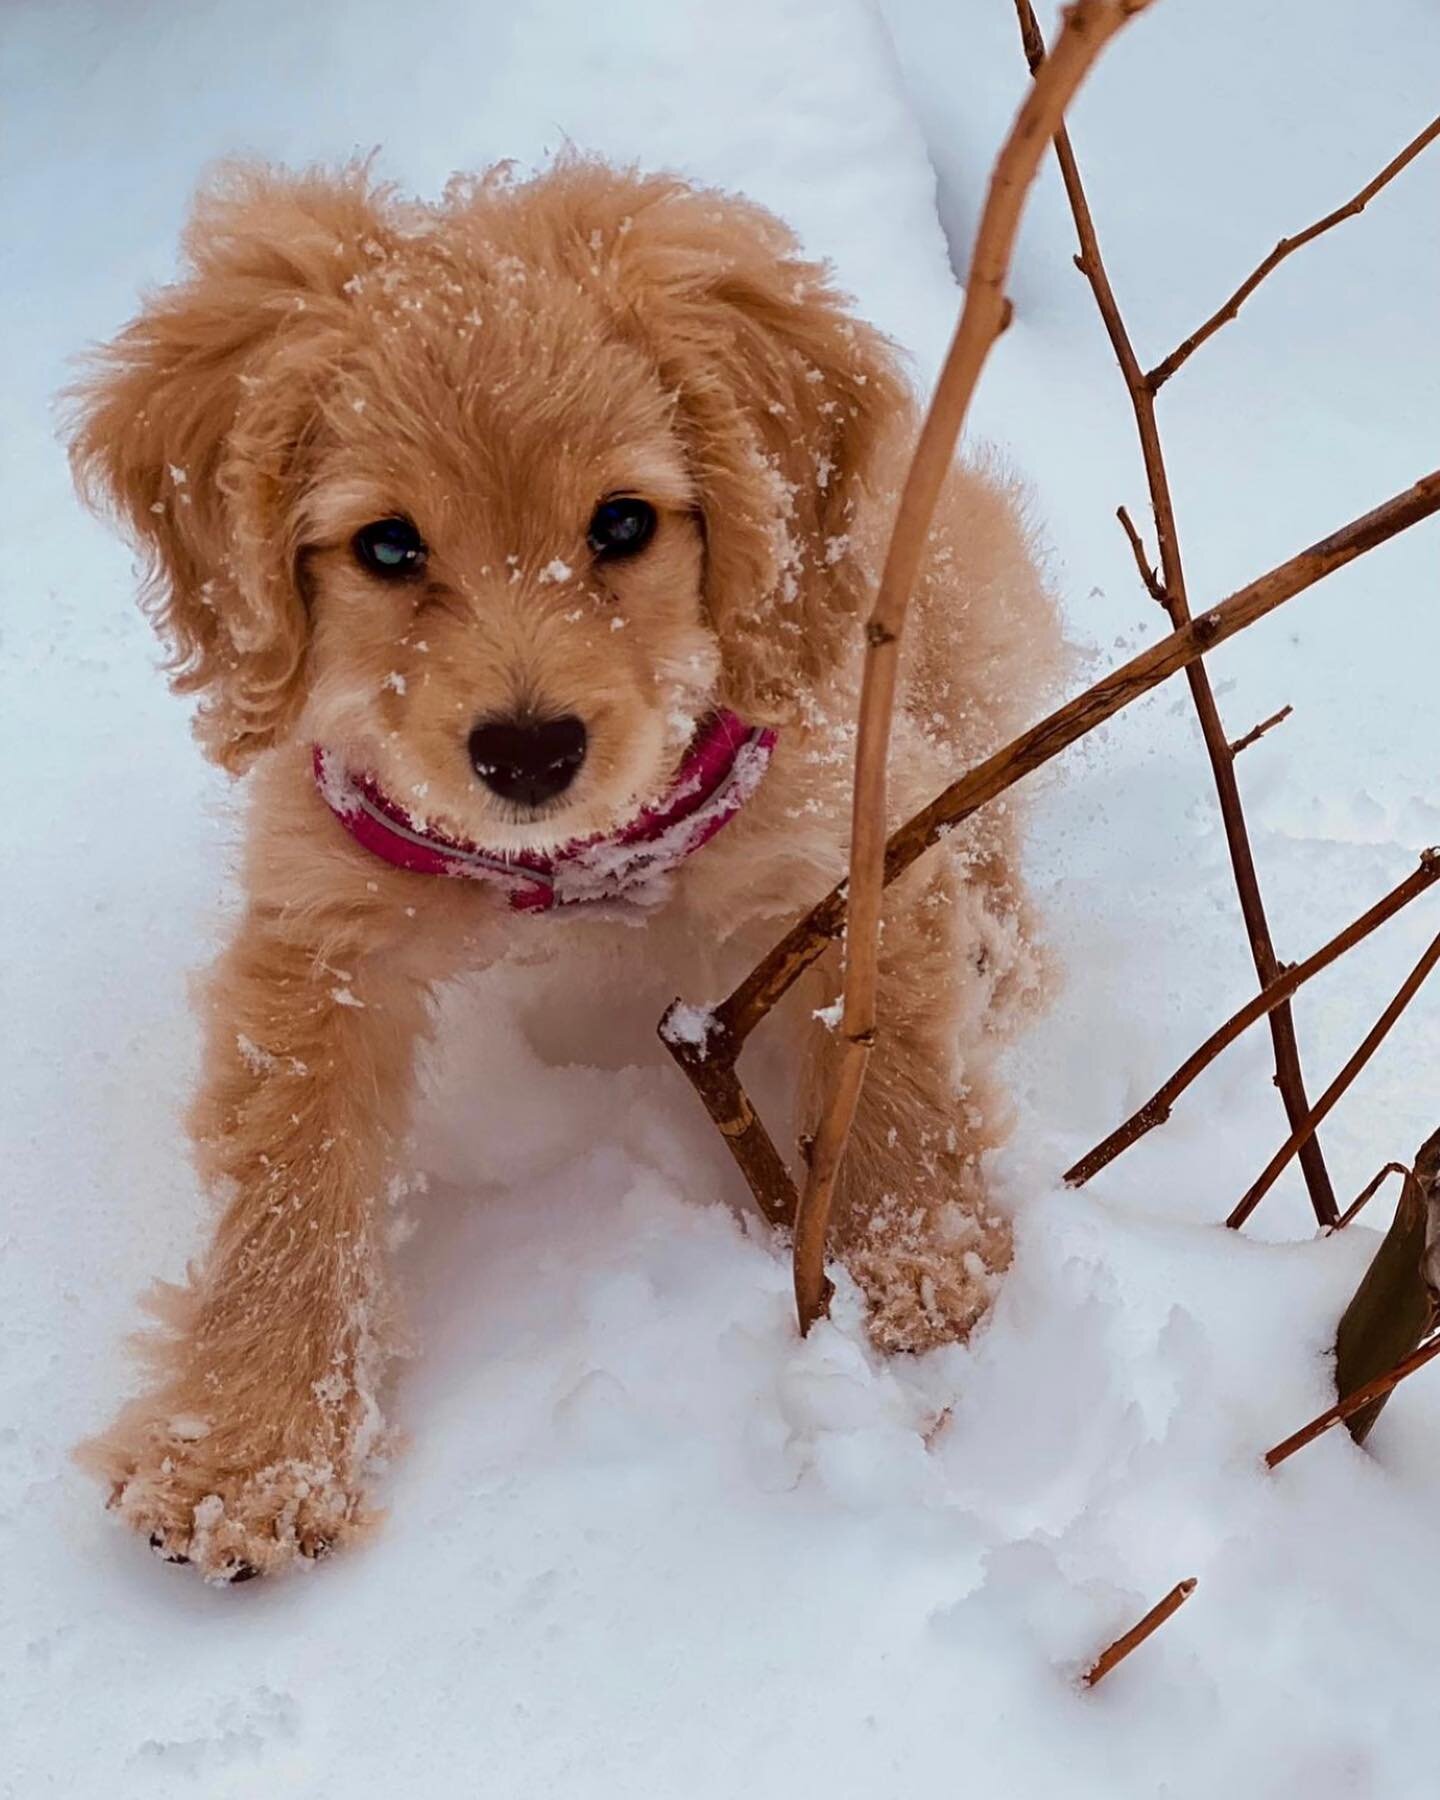 First snow day ❄️❄️❄️
&bull;
#puppy #cutepuppies #cutedogs #puppiesofinstagram #pup #puppylife #snowdog #snow #snowday #dogstagram #dogoftheday #dogsofinstagram #dogsofinsta